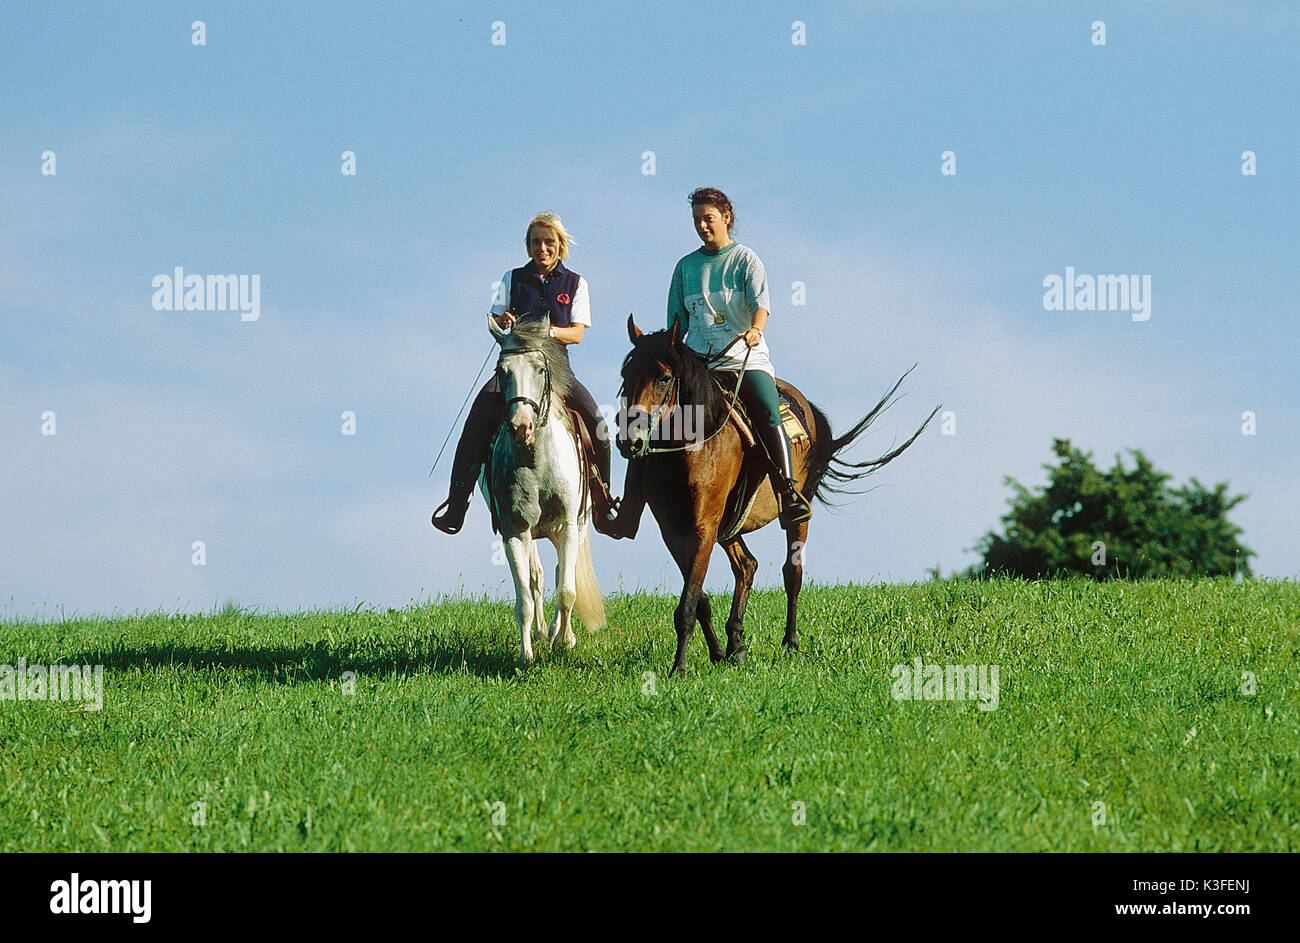 Ride on horses Stock Photo